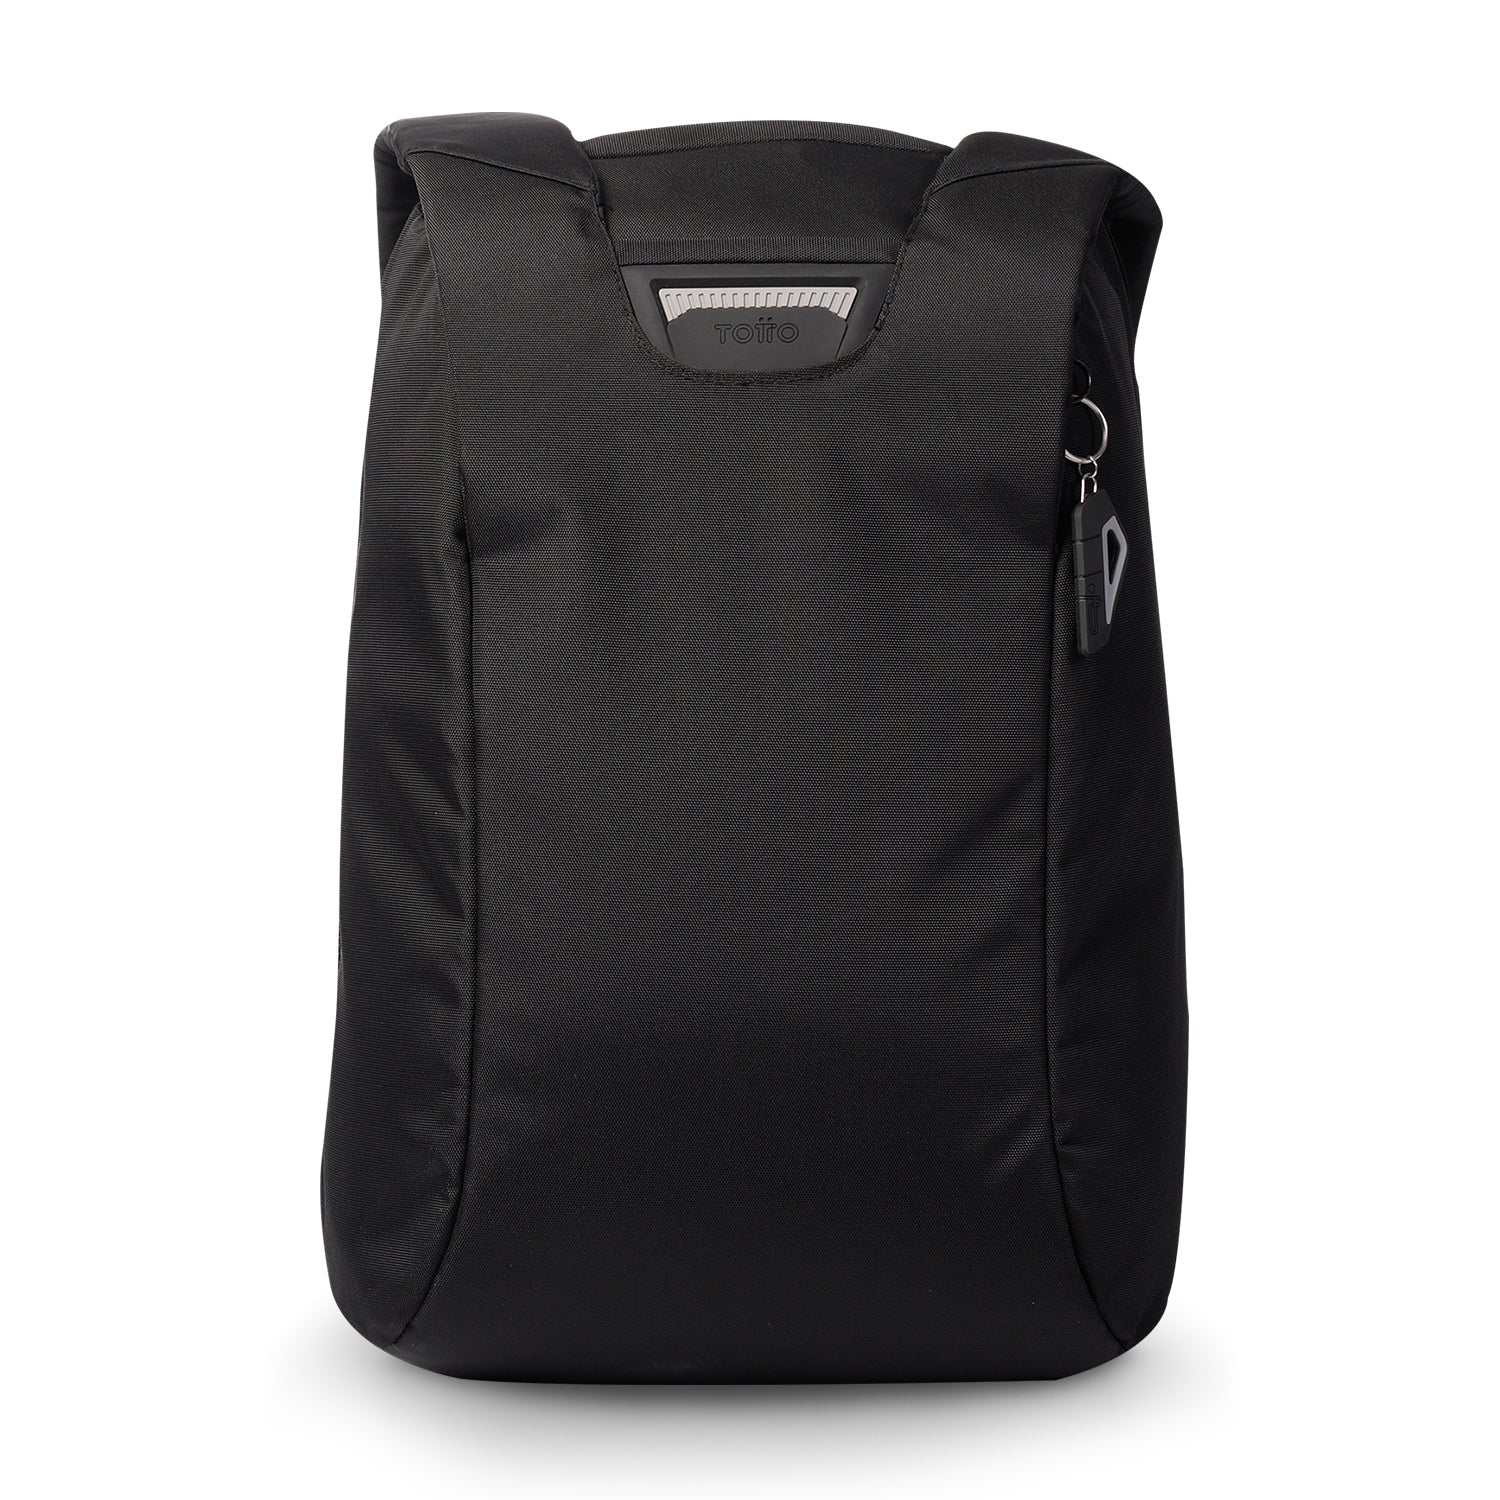 GUNDAM - Mochila de anime para laptop, bolsa de trabajo, mochila de cuero  empalmado con botones Pinback, Negro /2, Mochilas de mochila